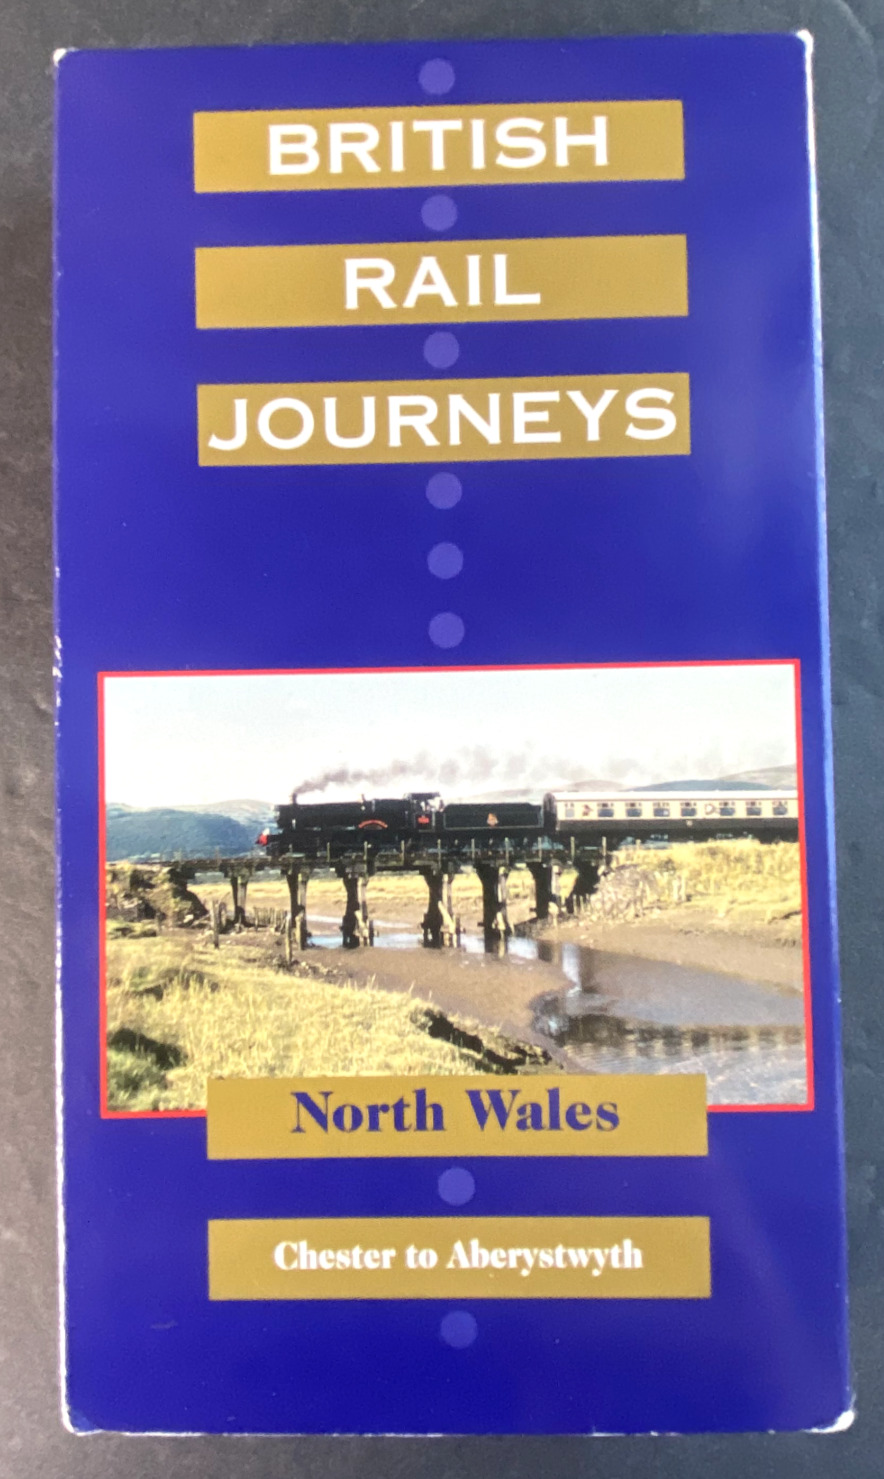 British Rail Journeys North Wales Chester to Aberystwyth VHS tape railroad train